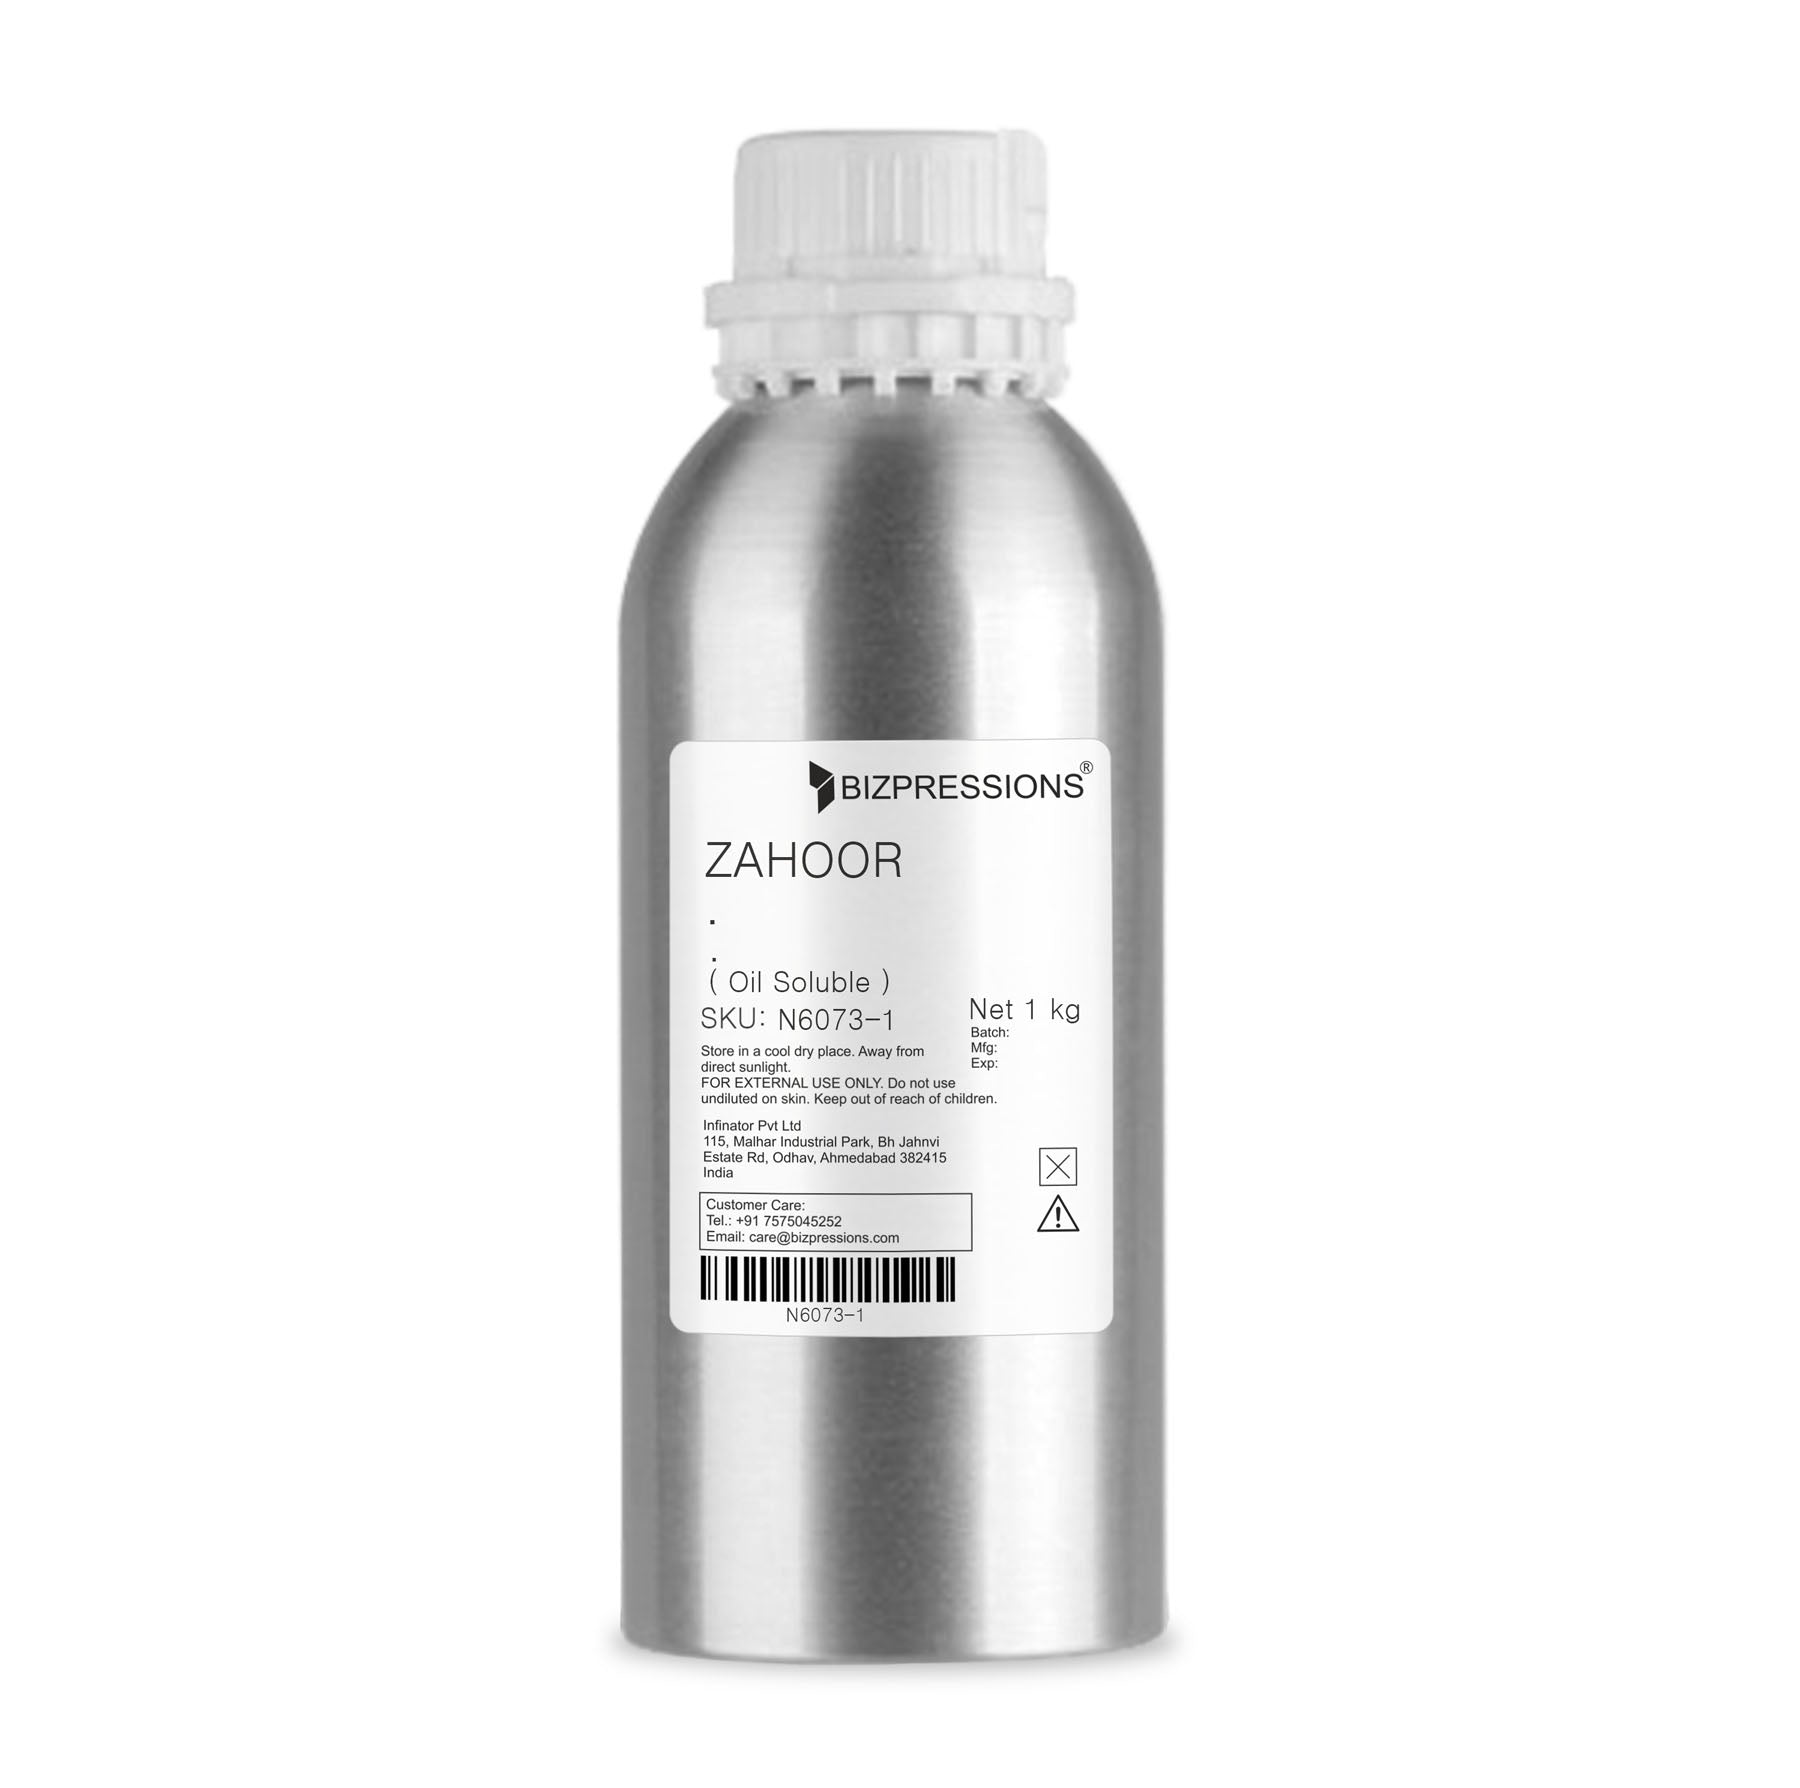 ZAHOOR - Fragrance ( Oil Soluble ) - 1 kg